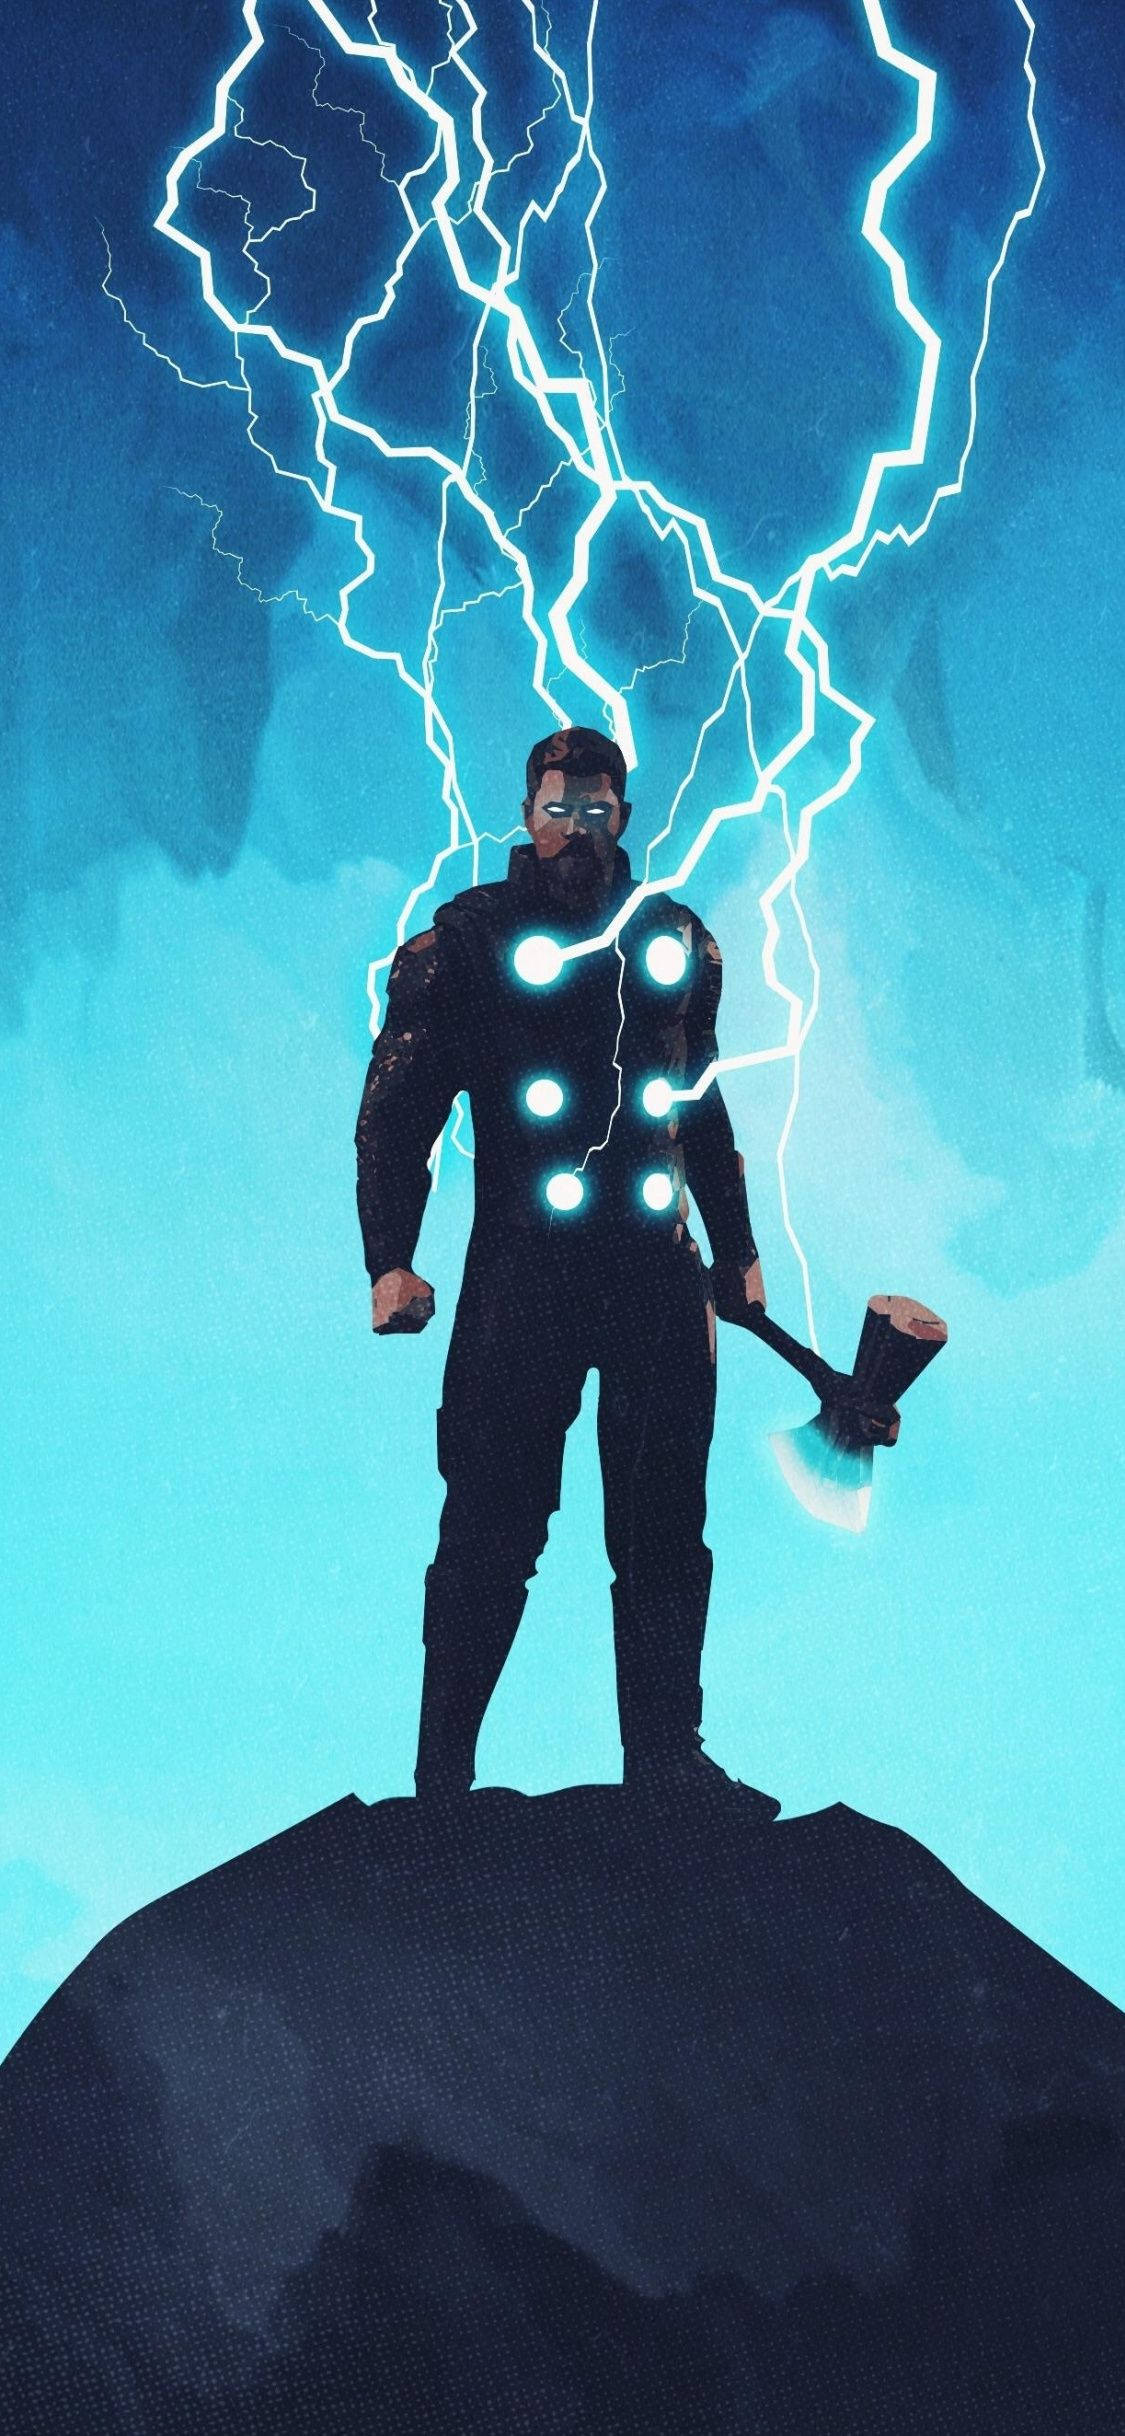 Download Thor Stormbreaker Fanart Lightning Effect Wallpaper | Wallpapers .com